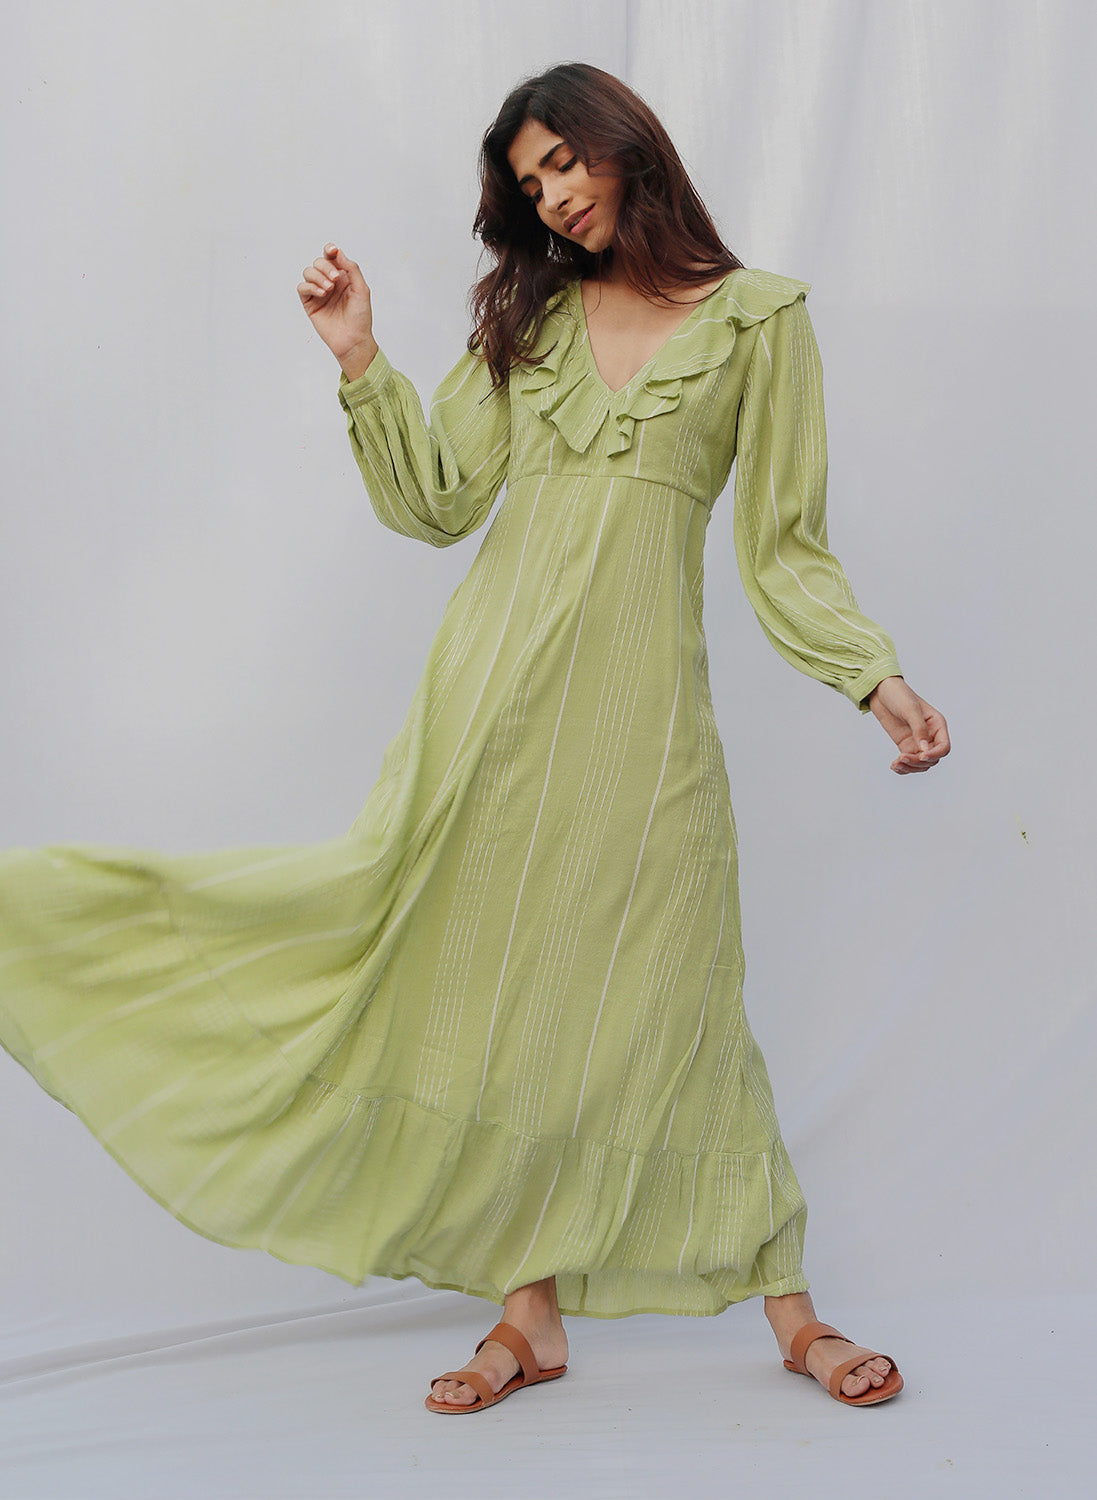 Shop Online Emma Ruffled Dress